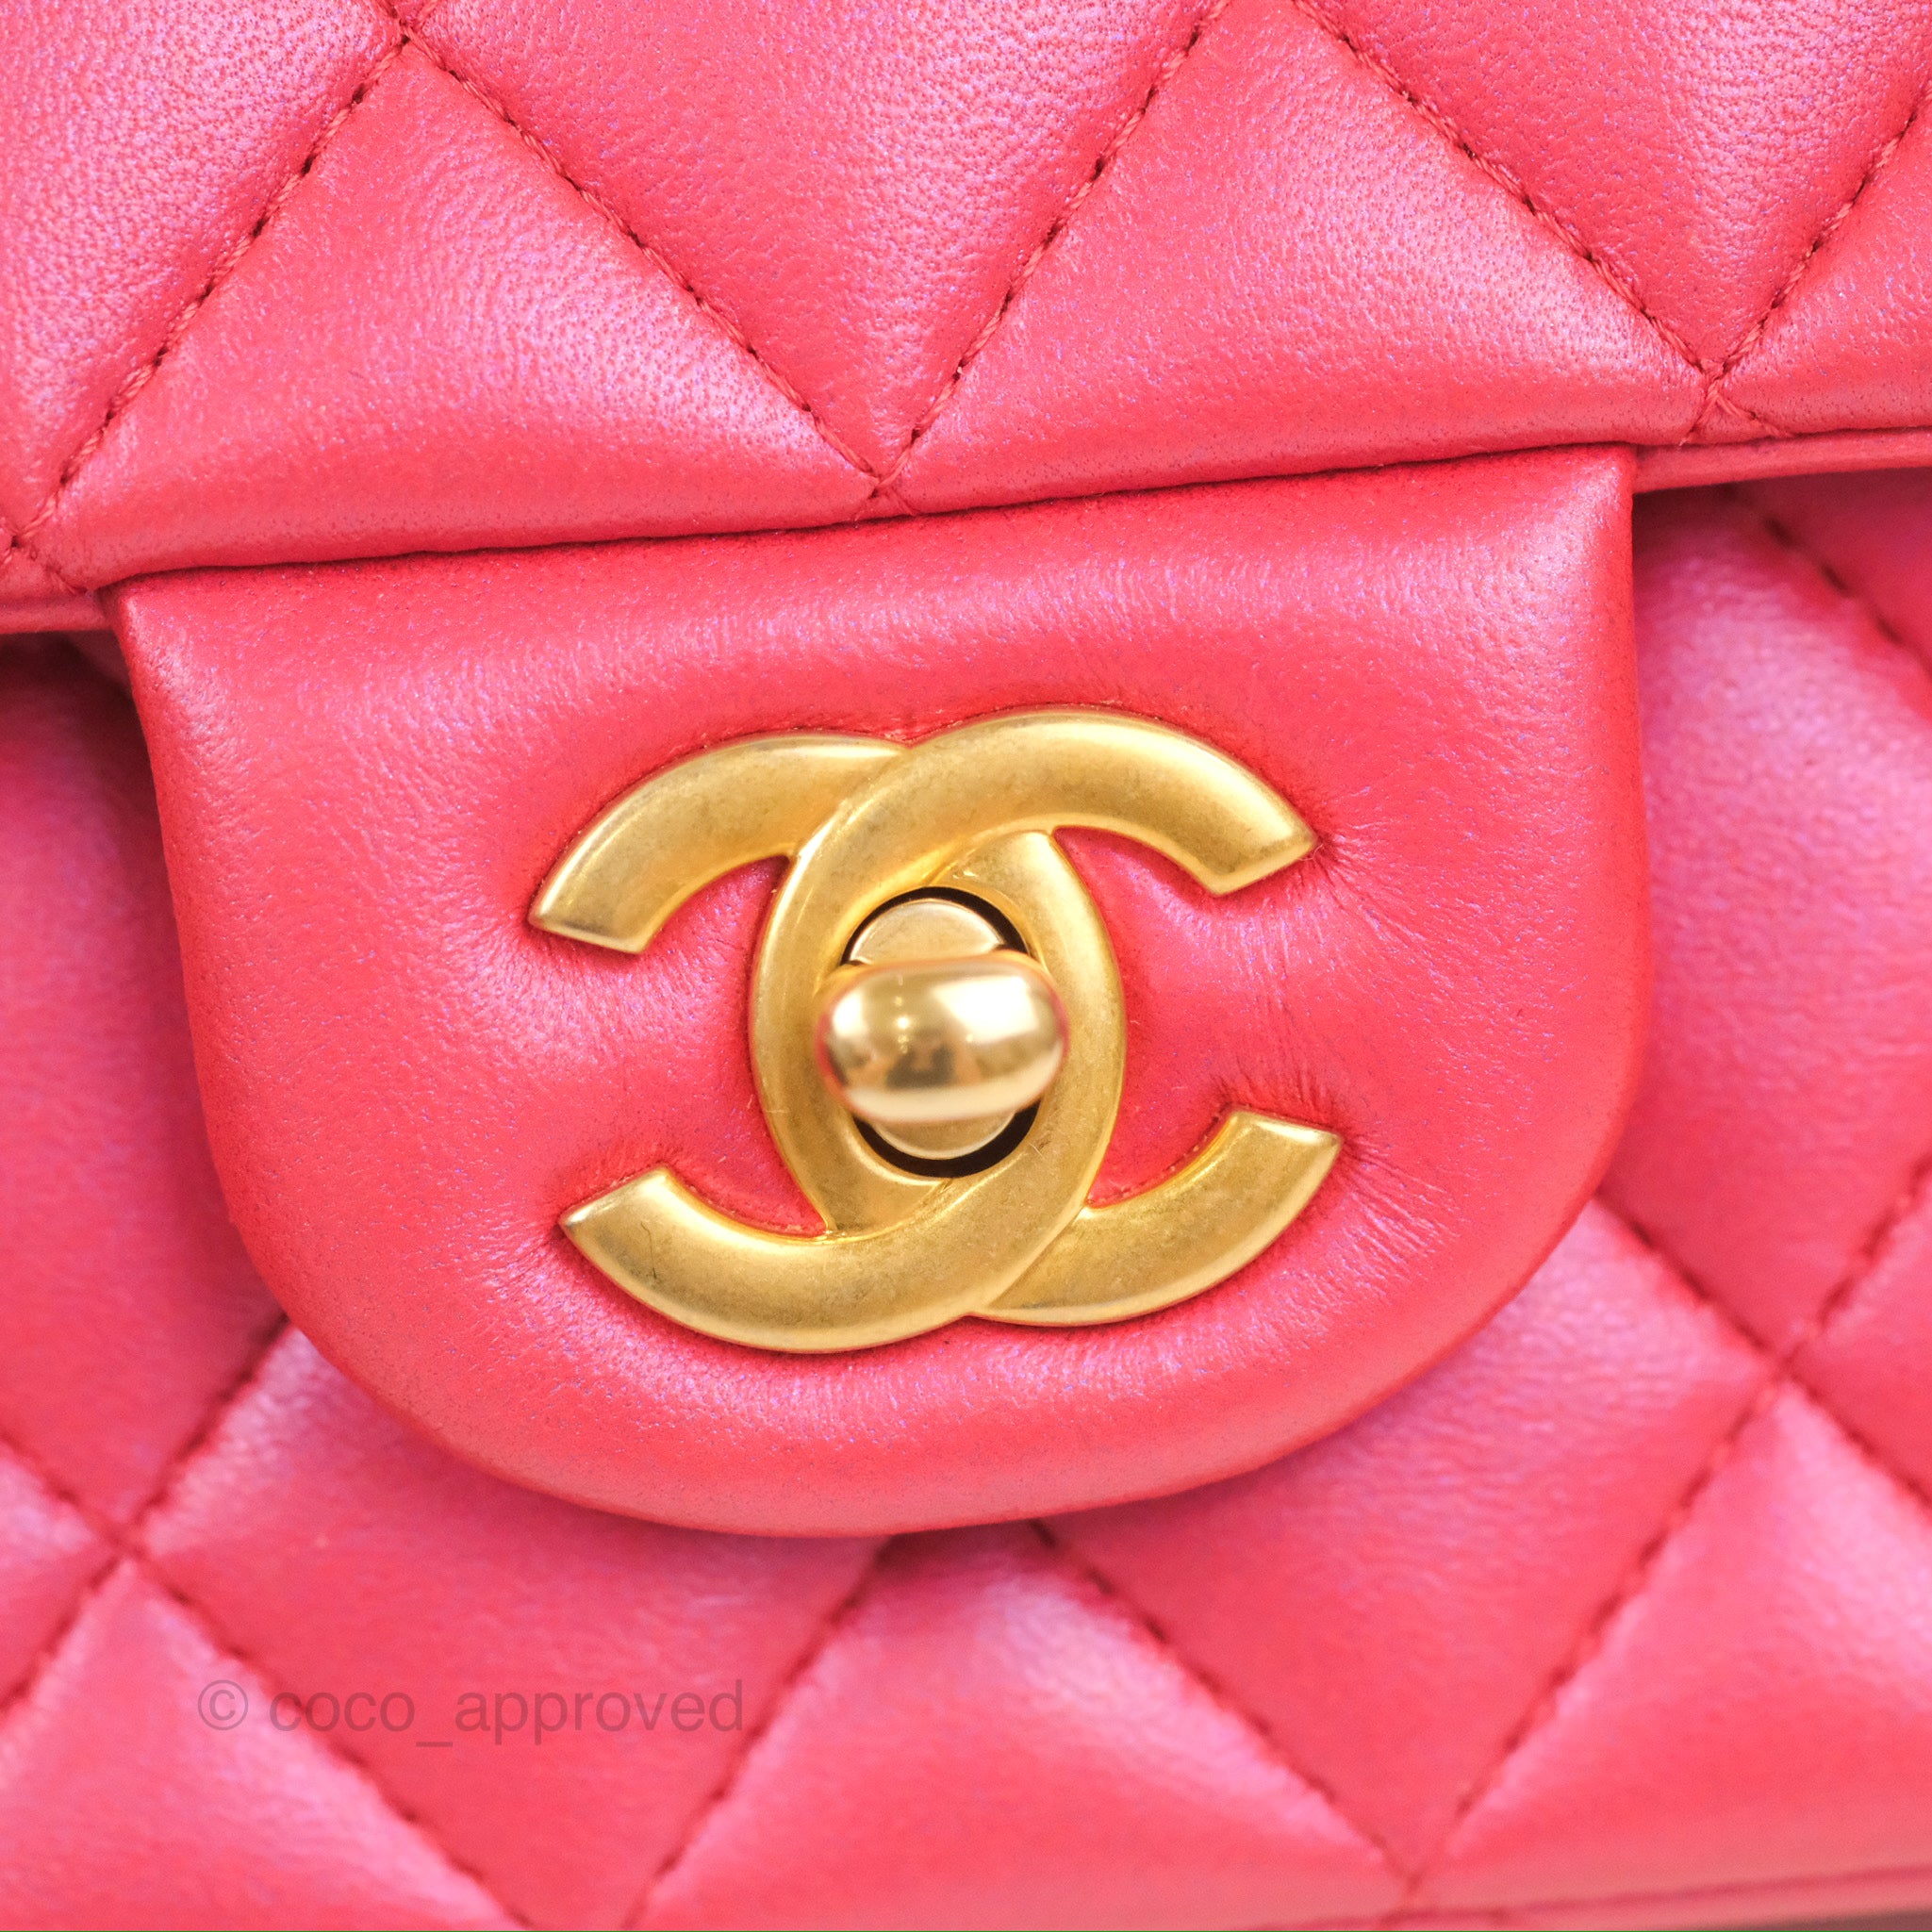 Chanel Top Handle Mini Rectangular Flap Bag Iridescent Dark Pink